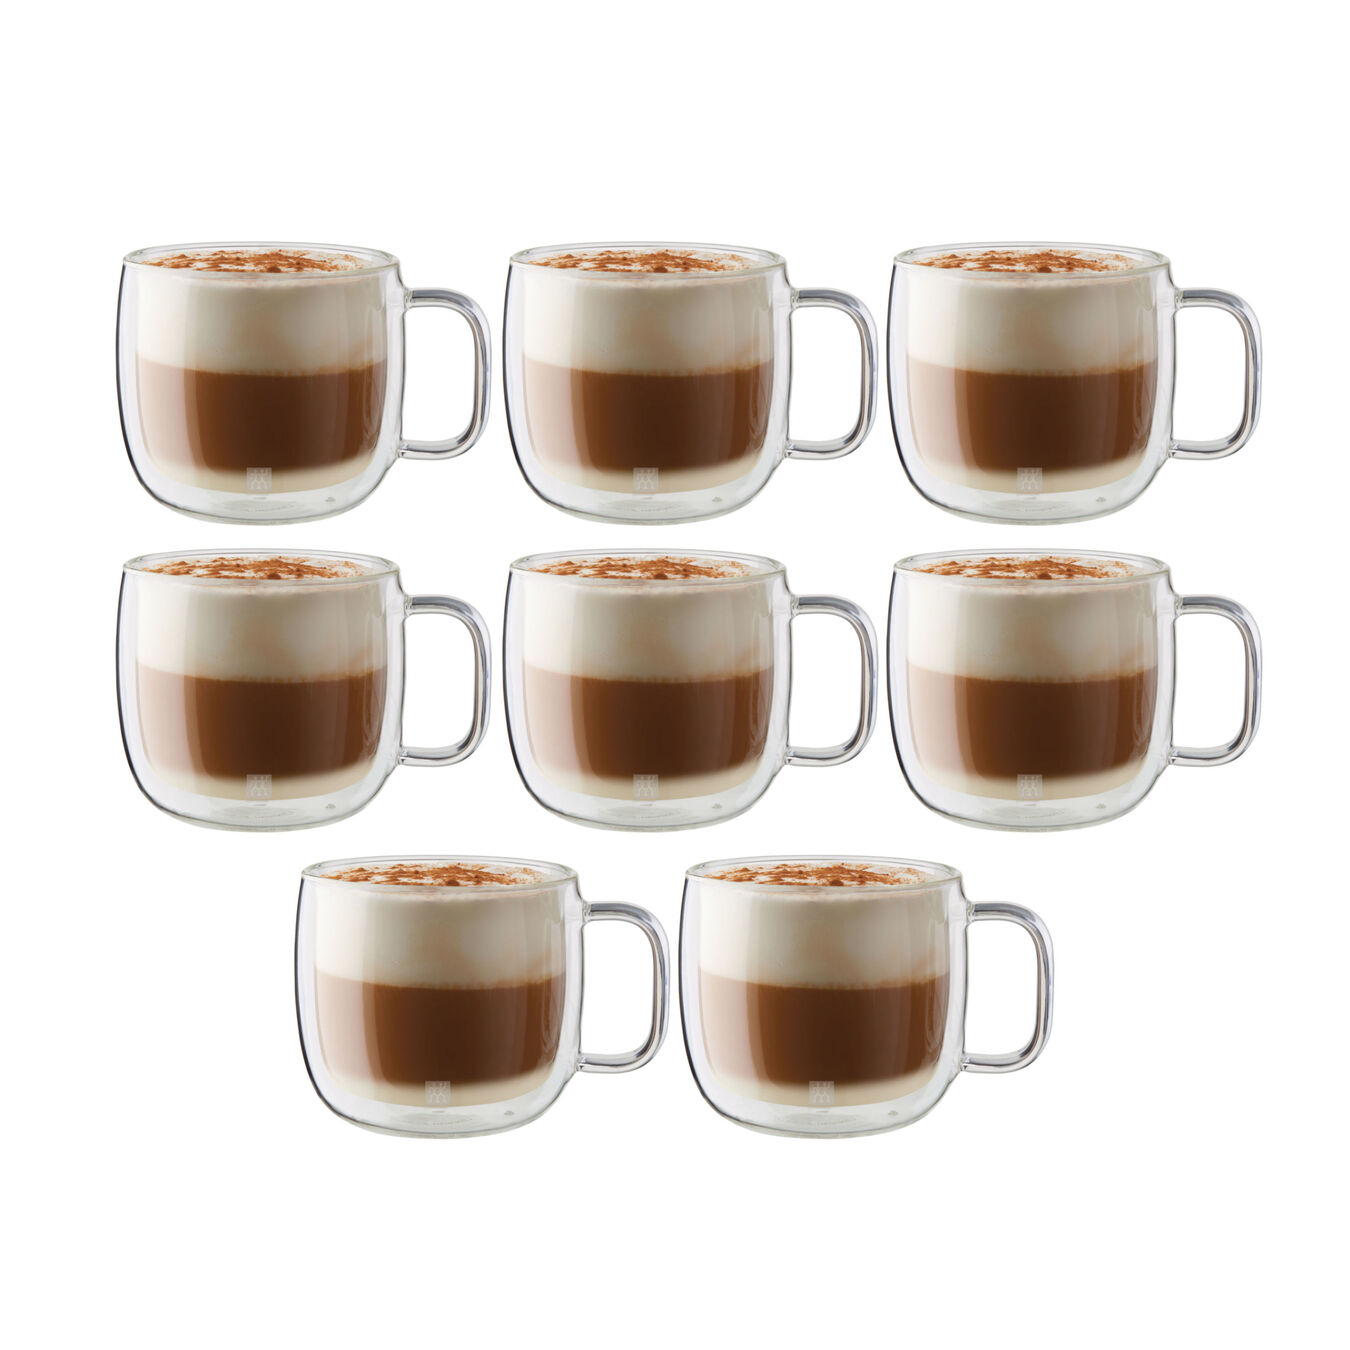 8 Piece Cappuccino Mug Set - Value Pack,,large 2